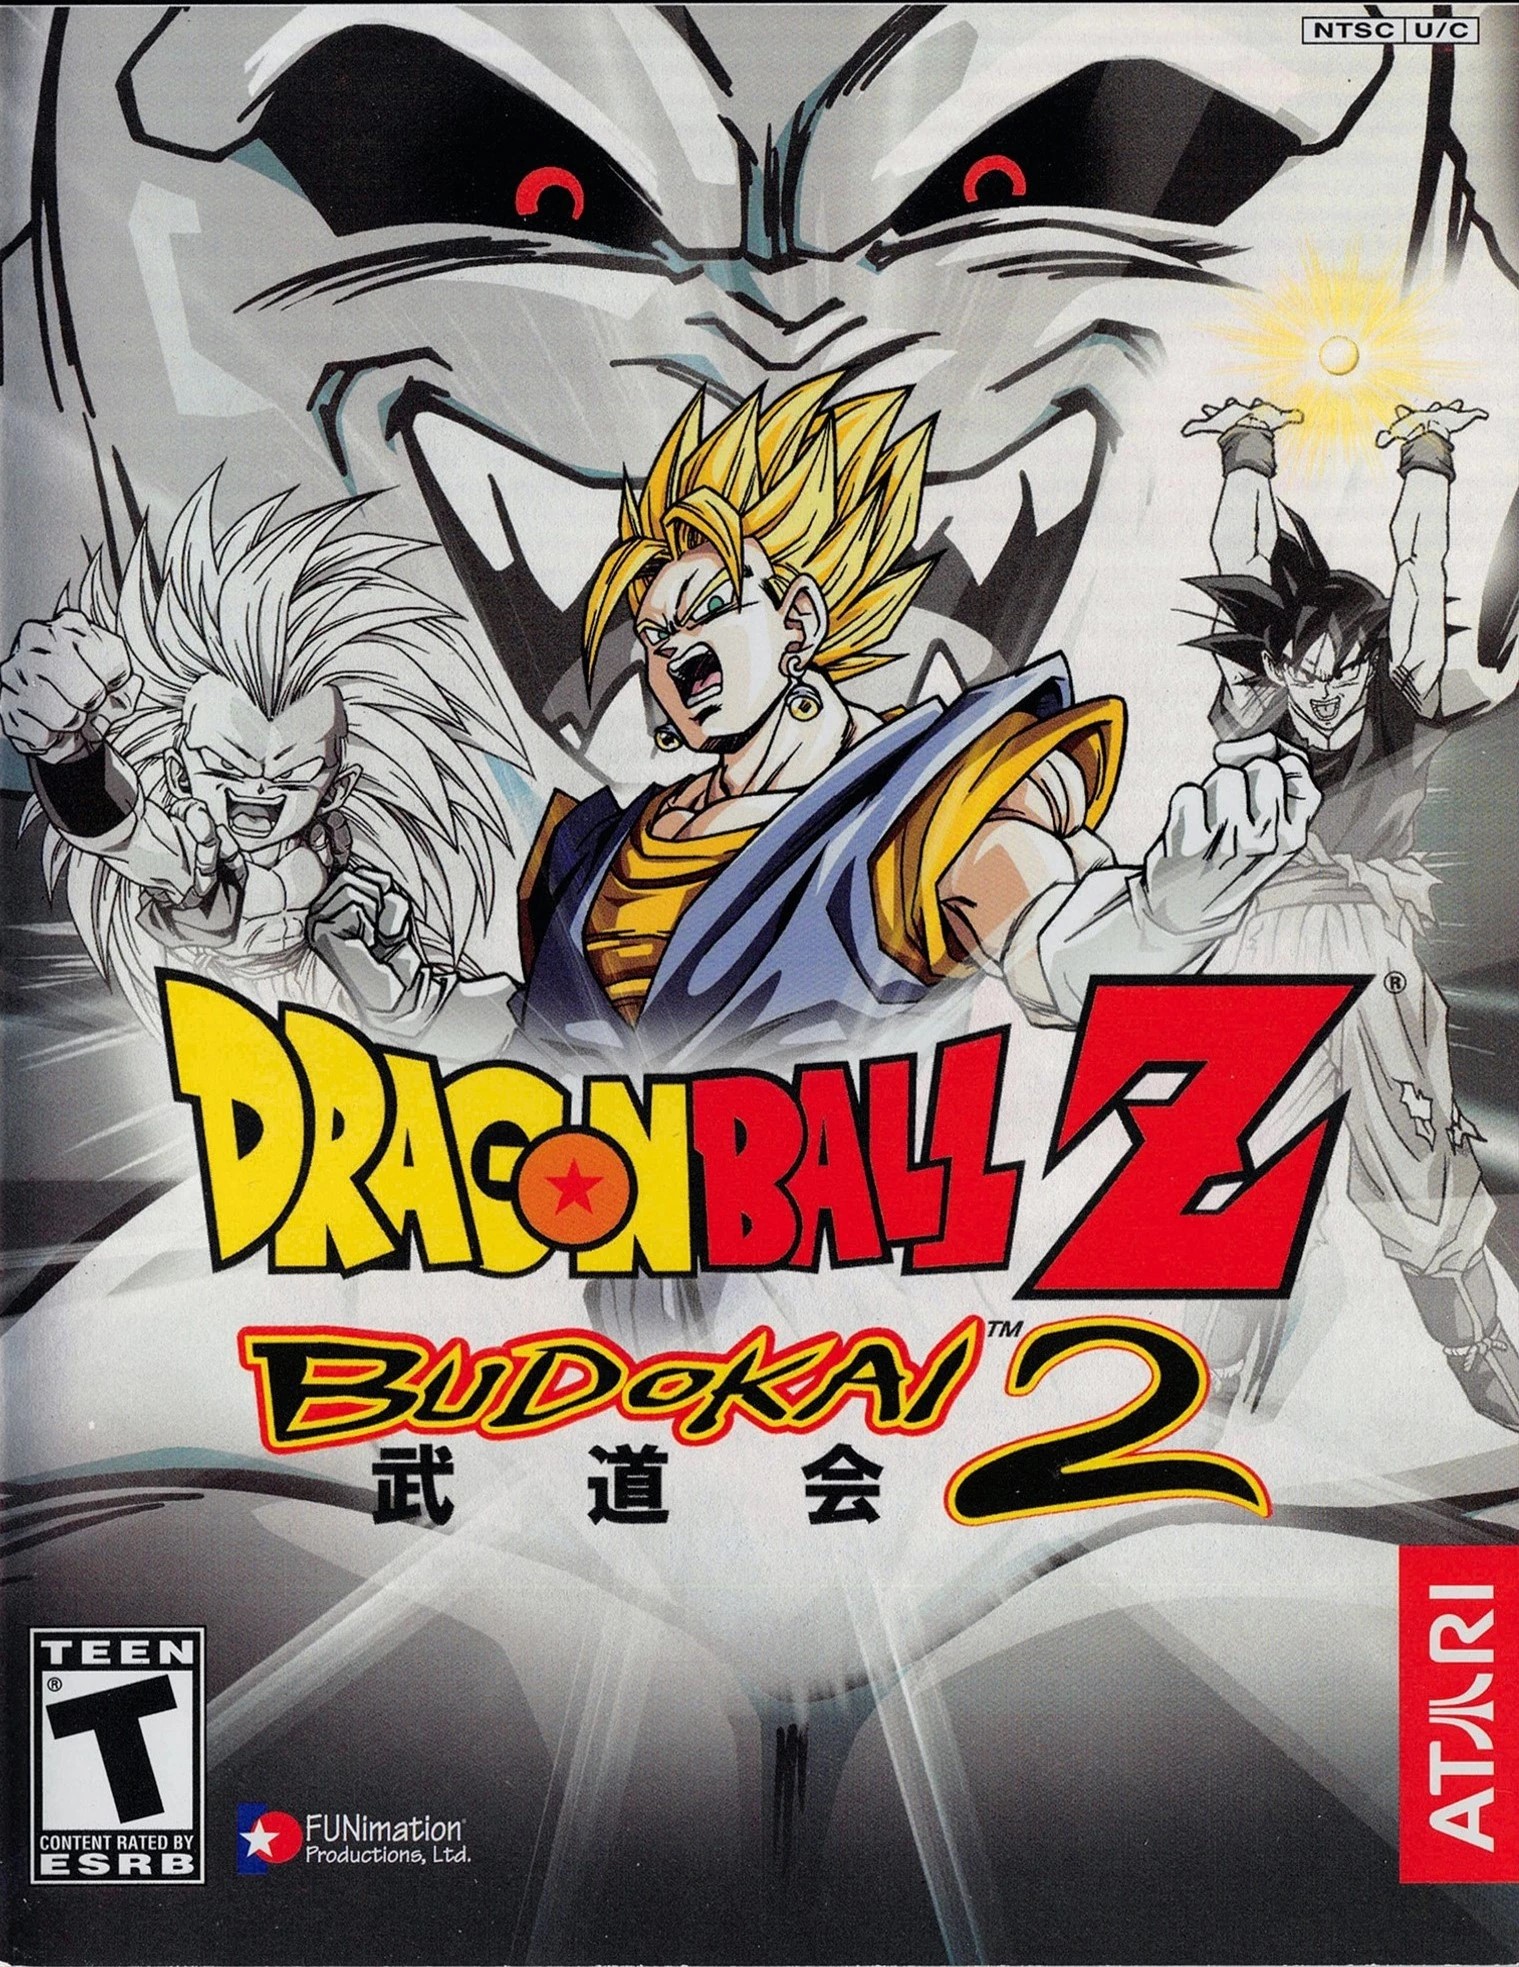 Dragon Ball Z Budokai Tenkaichi 3 (Sony Playstation 2) Custom Case